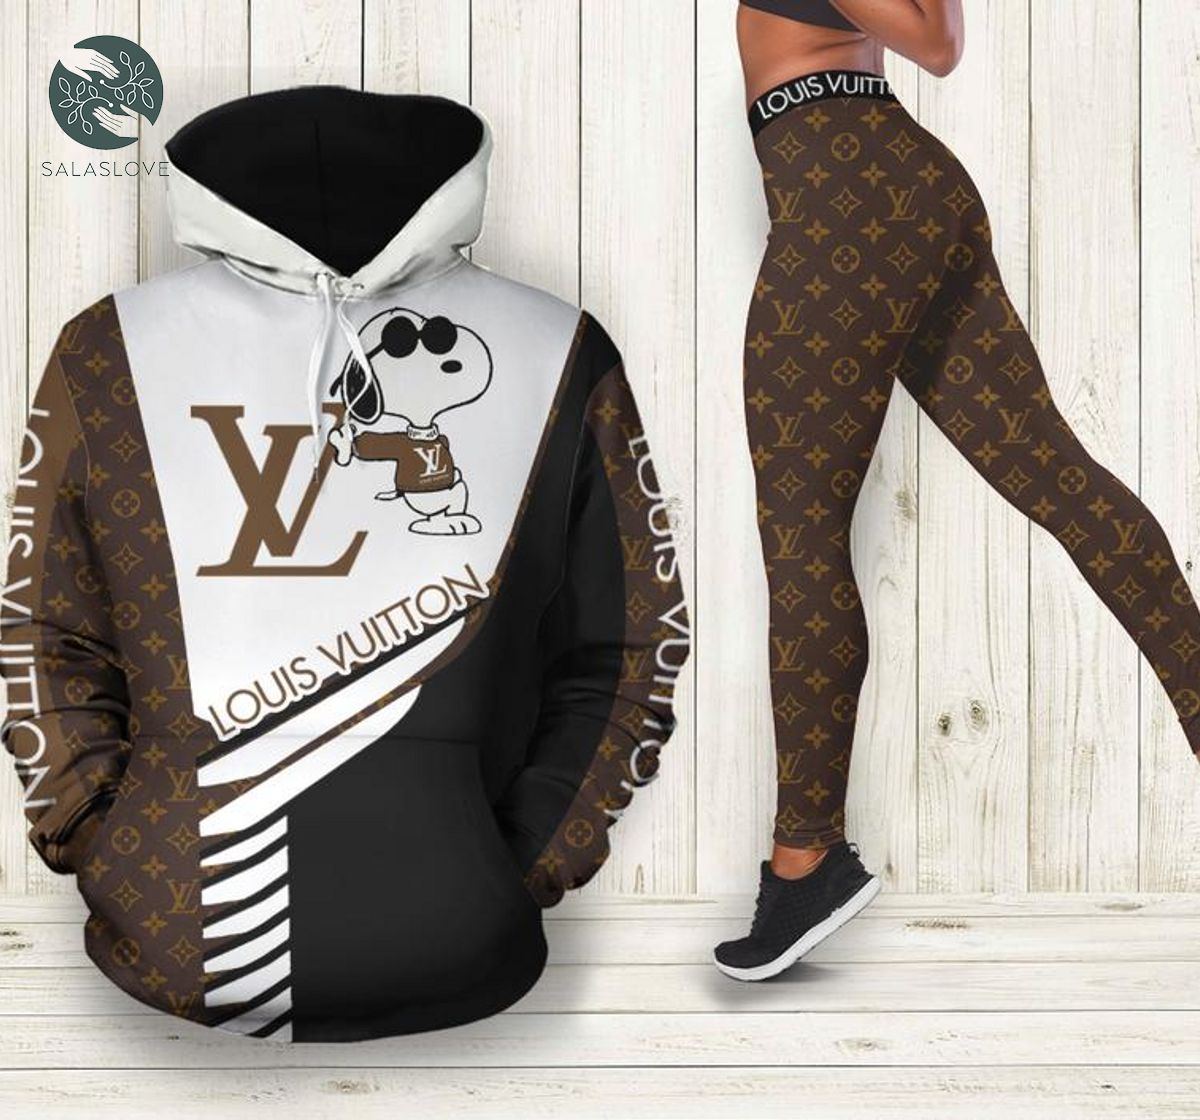 Louis vuitton snoopy hoodie leggings luxury brand lv outfit disney gifts